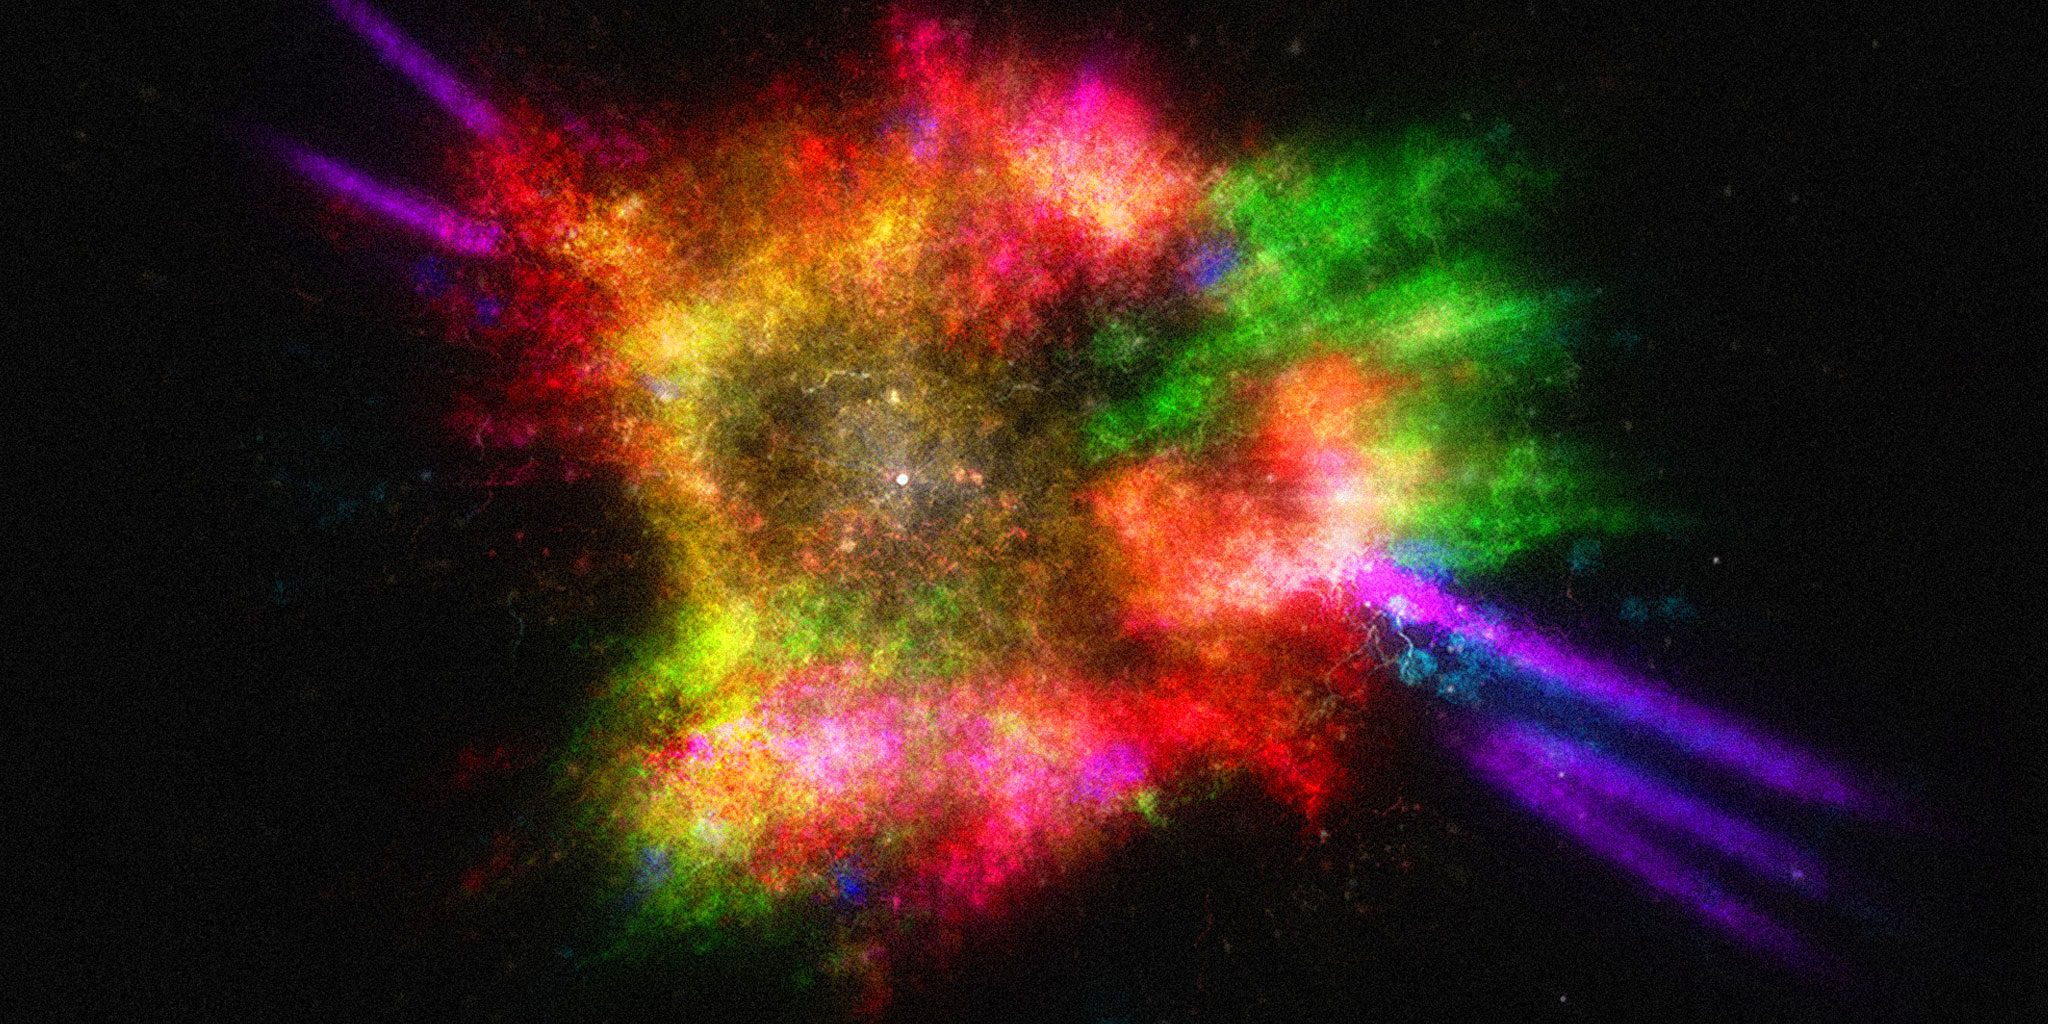 Reminants of supernova